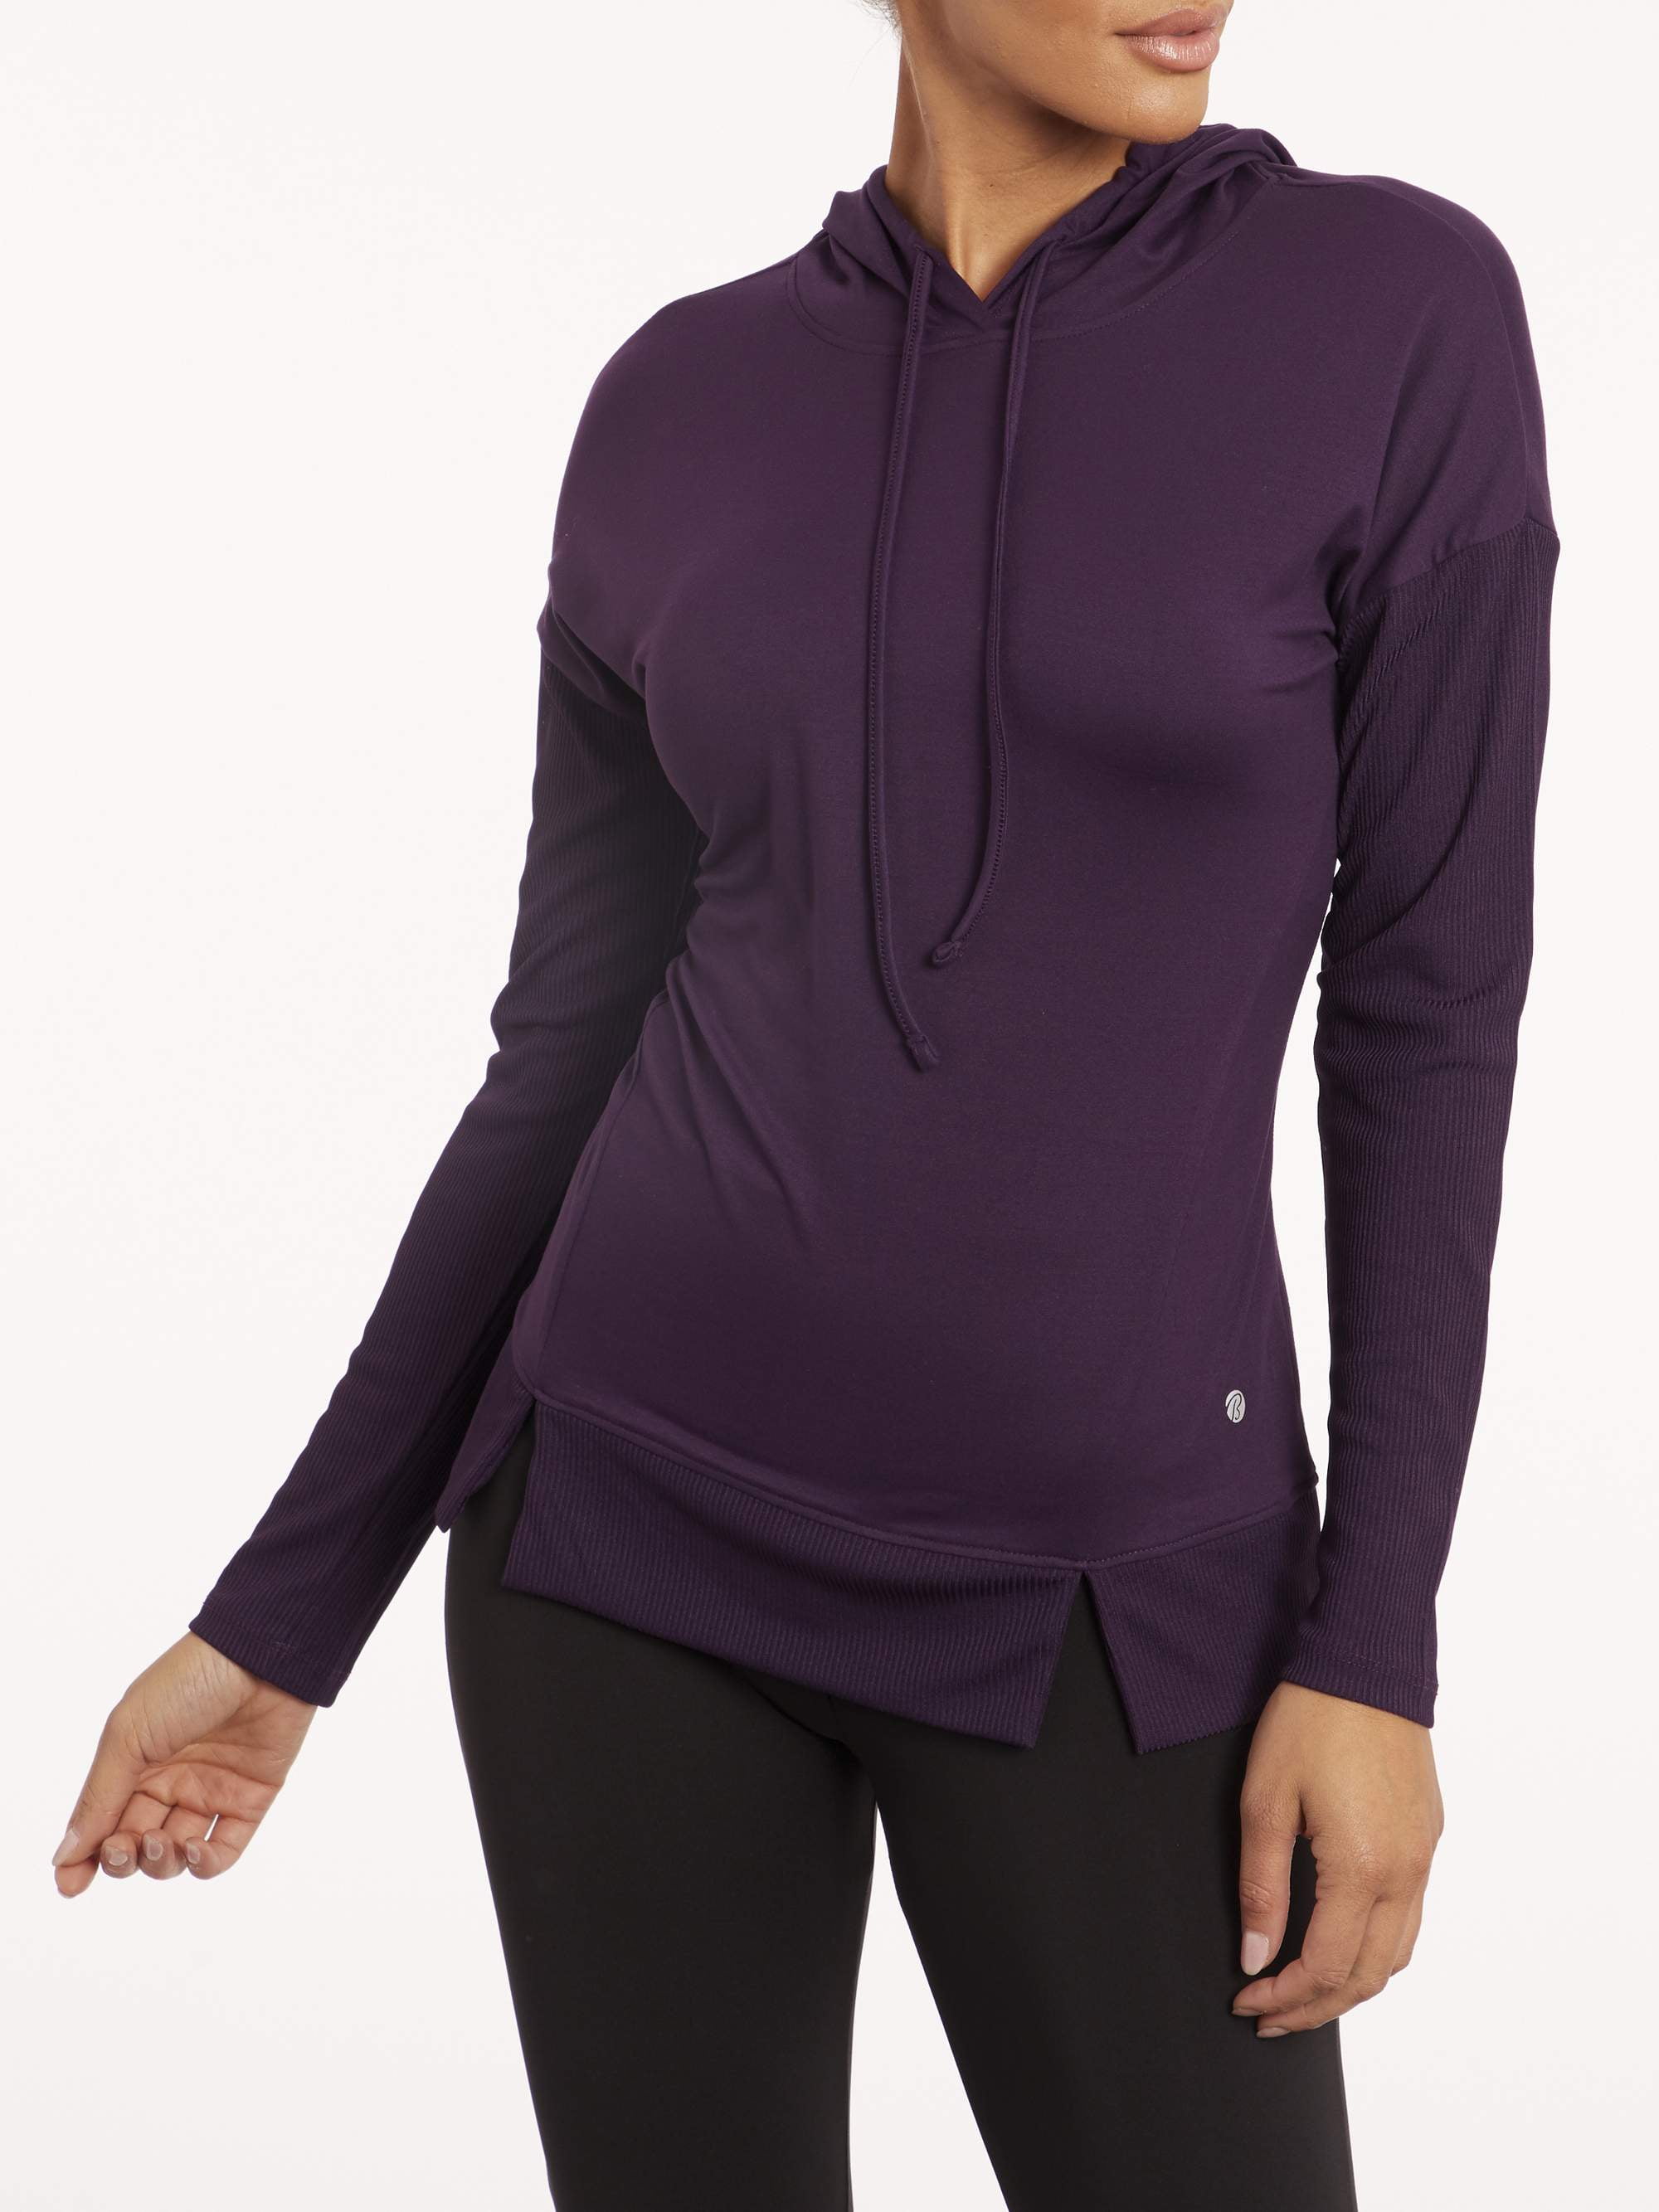 Zalanala Womens Long Sleeve Splcing Color Sweatshirt Pullover with Drawstrings Tops Blouse